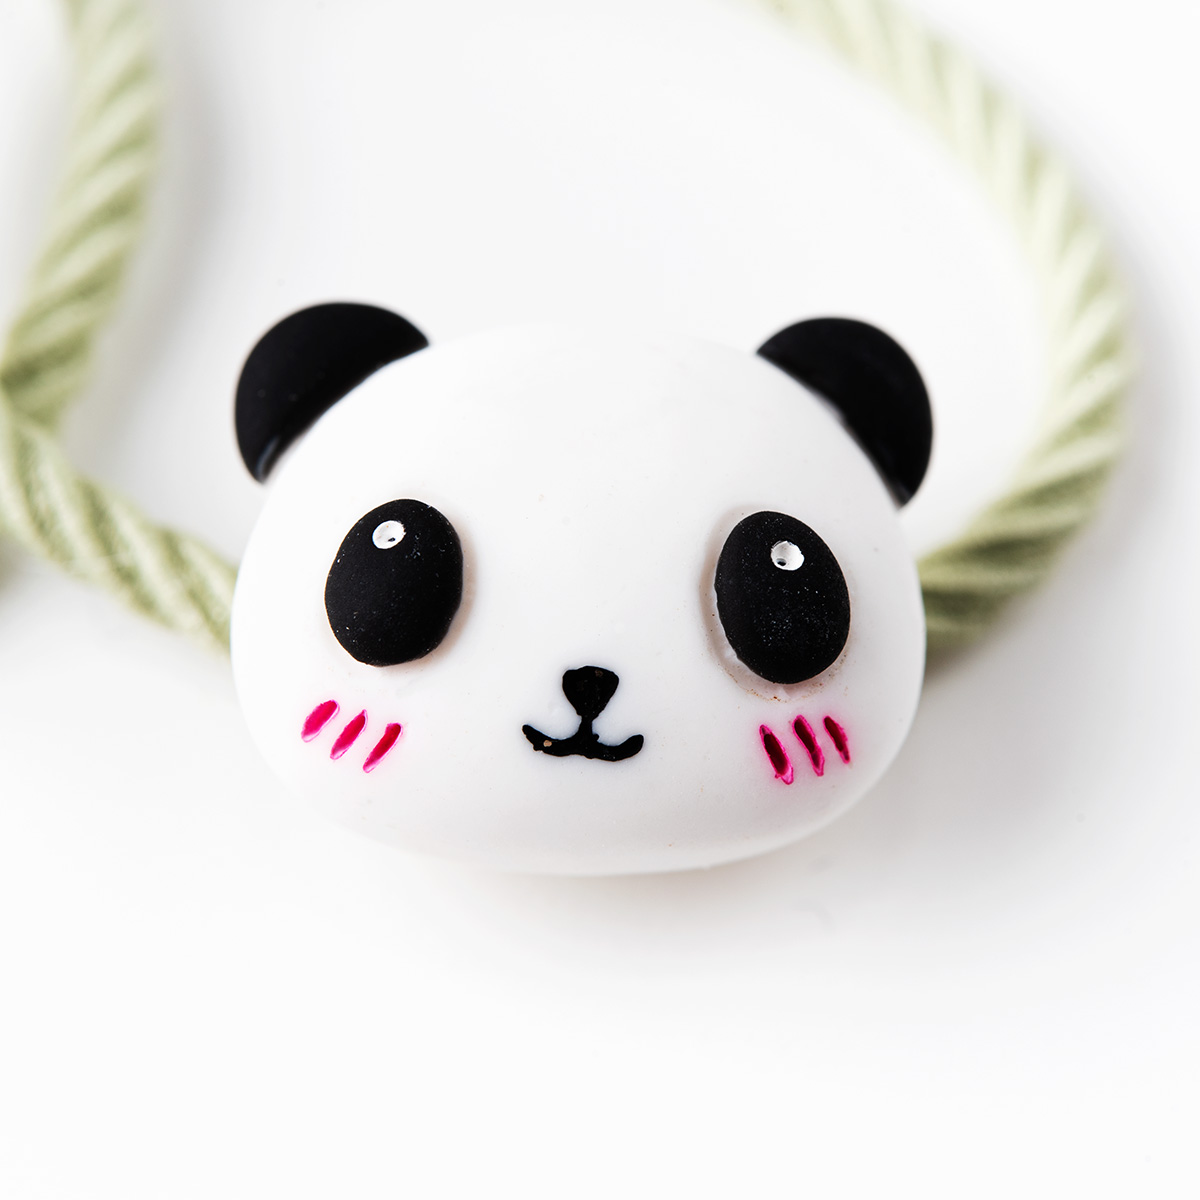 Panda elastiekjes zwart – wit